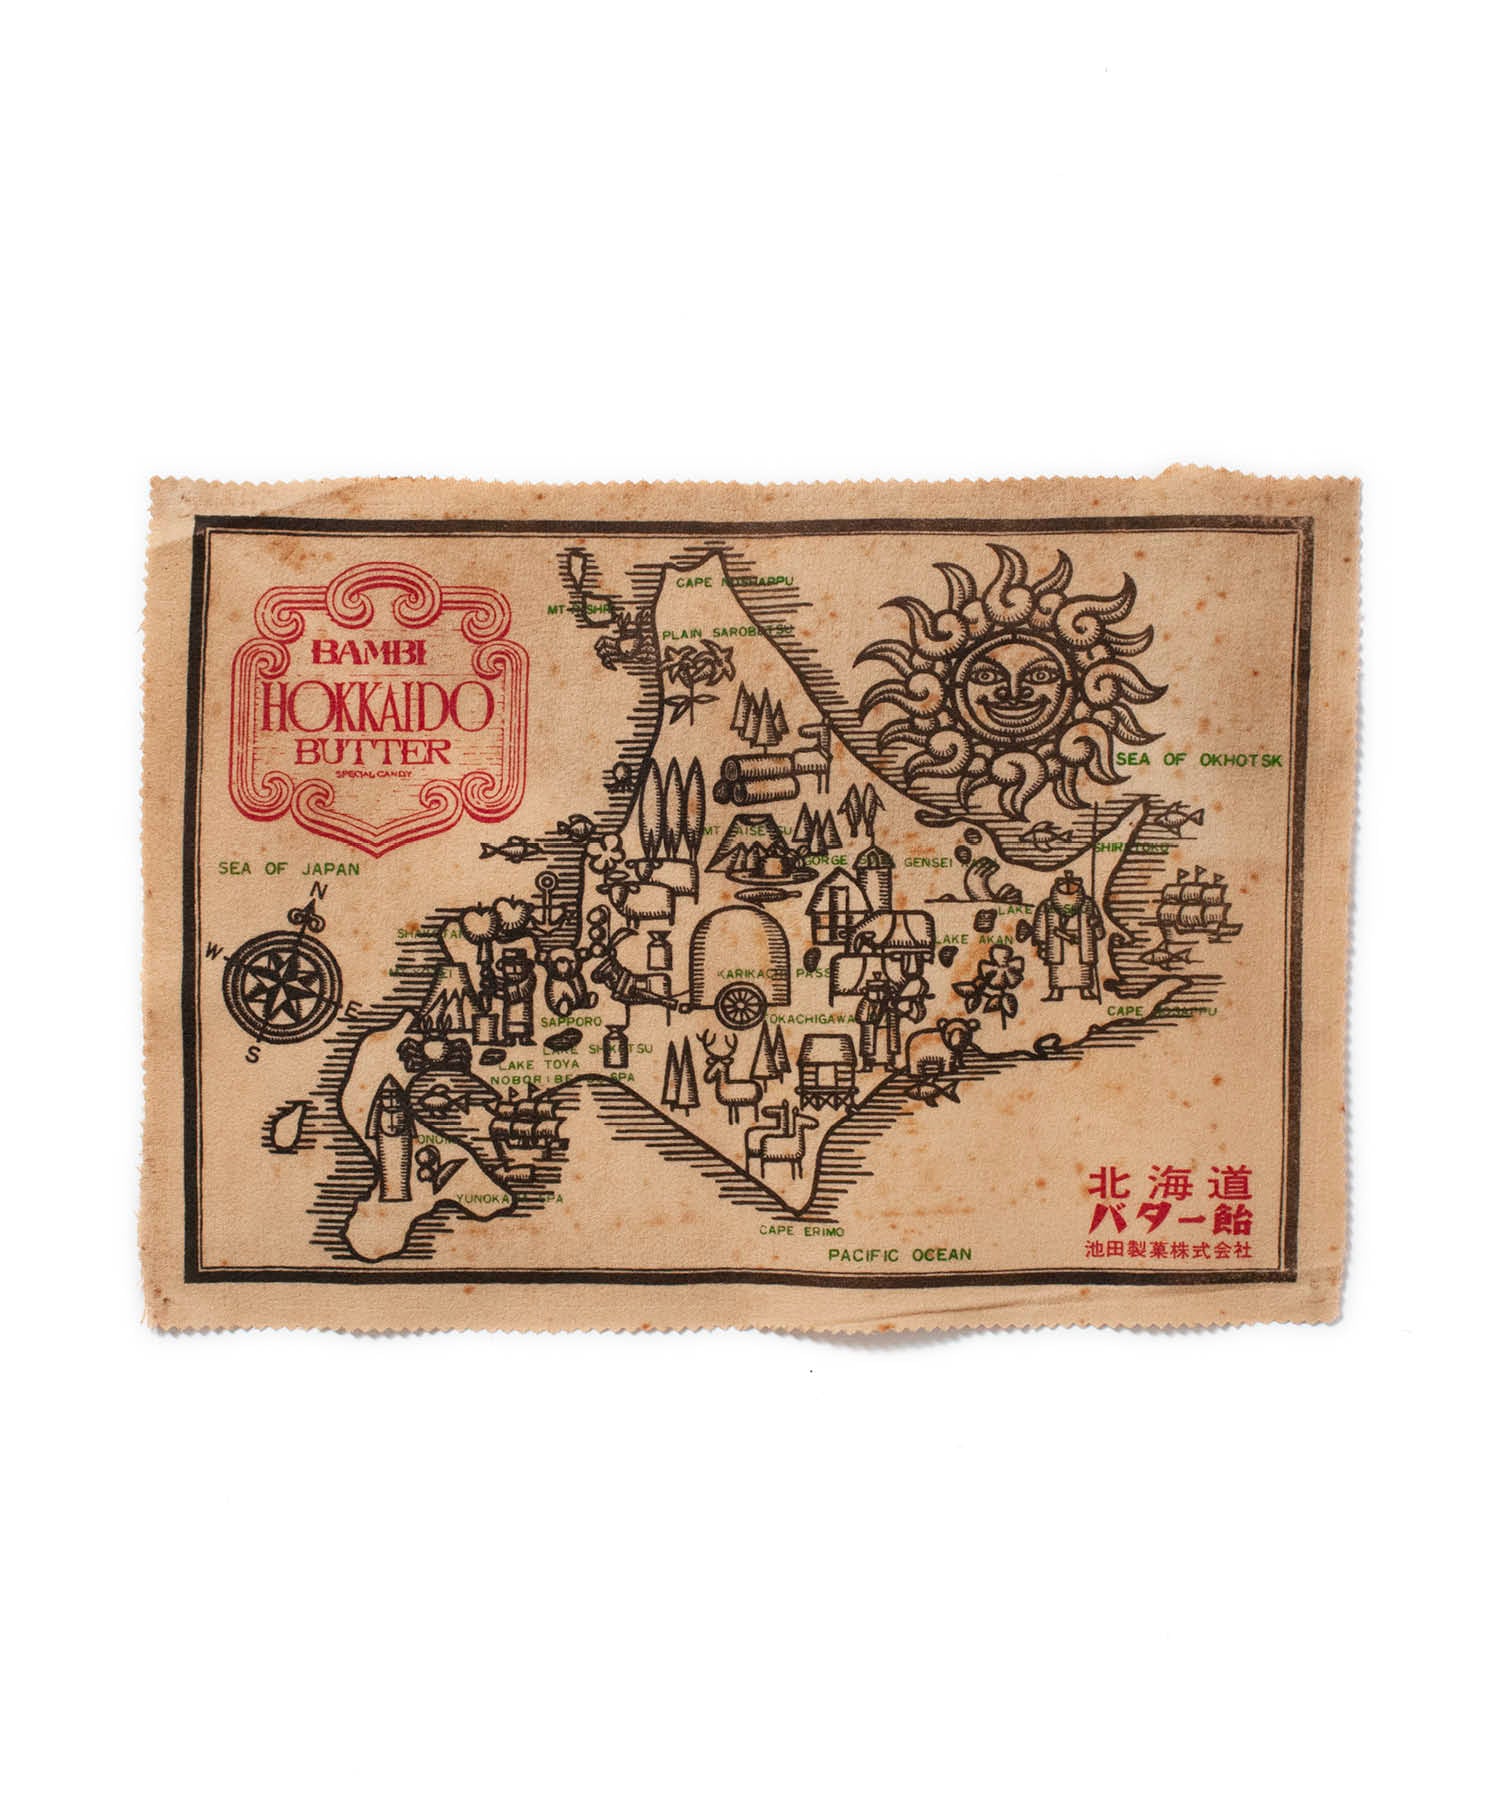 Vintage Object : バンビ北海道バターのマップ | LIKE THIS SHOP